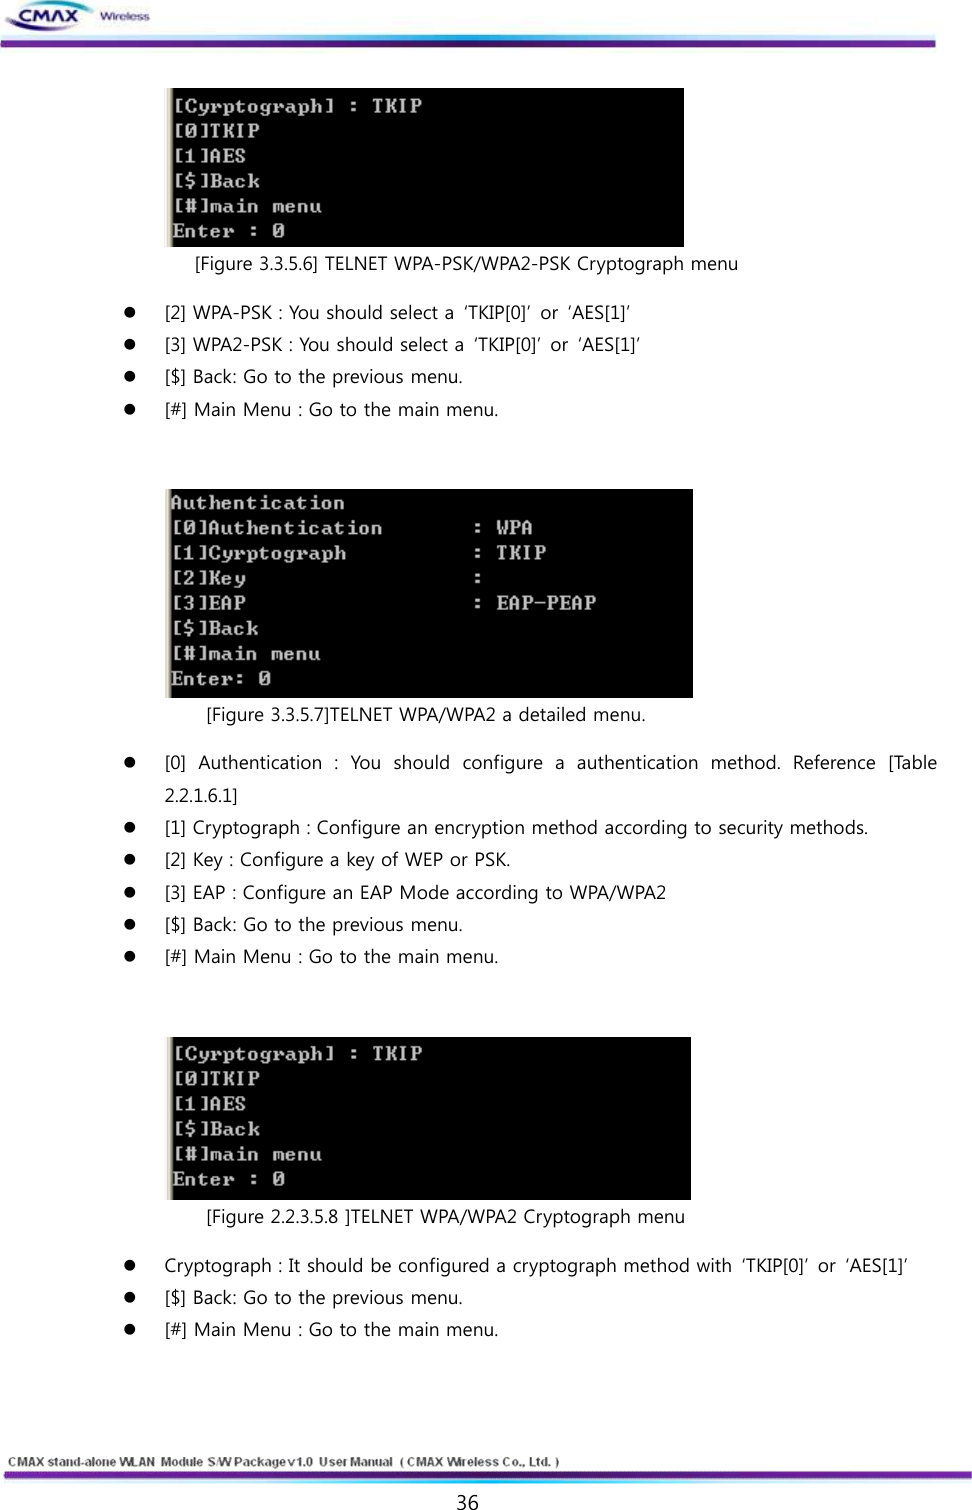   36  www.cmaxwireless.co.kr  [Figure 3.3.5.6] TELNET WPA-PSK/WPA2-PSK Cryptograph menu l [2] WPA-PSK : You should select a  ‘TKIP[0]’  or  ‘AES[1]’ l [3] WPA2-PSK : You should select a  ‘TKIP[0]’  or  ‘AES[1]’ l [$] Back: Go to the previous menu.   l [#] Main Menu : Go to the main menu.    [Figure 3.3.5.7]TELNET WPA/WPA2 a detailed menu. l [0]  Authentication  :  You  should  configure  a  authentication  method.  Reference  [Table 2.2.1.6.1] l [1] Cryptograph : Configure an encryption method according to security methods.   l [2] Key : Configure a key of WEP or PSK. l [3] EAP : Configure an EAP Mode according to WPA/WPA2 l [$] Back: Go to the previous menu.   l [#] Main Menu : Go to the main menu.    [Figure 2.2.3.5.8 ]TELNET WPA/WPA2 Cryptograph menu l Cryptograph : It should be configured a cryptograph method with  ‘TKIP[0]’  or  ‘AES[1]’ l [$] Back: Go to the previous menu.   l [#] Main Menu : Go to the main menu.  